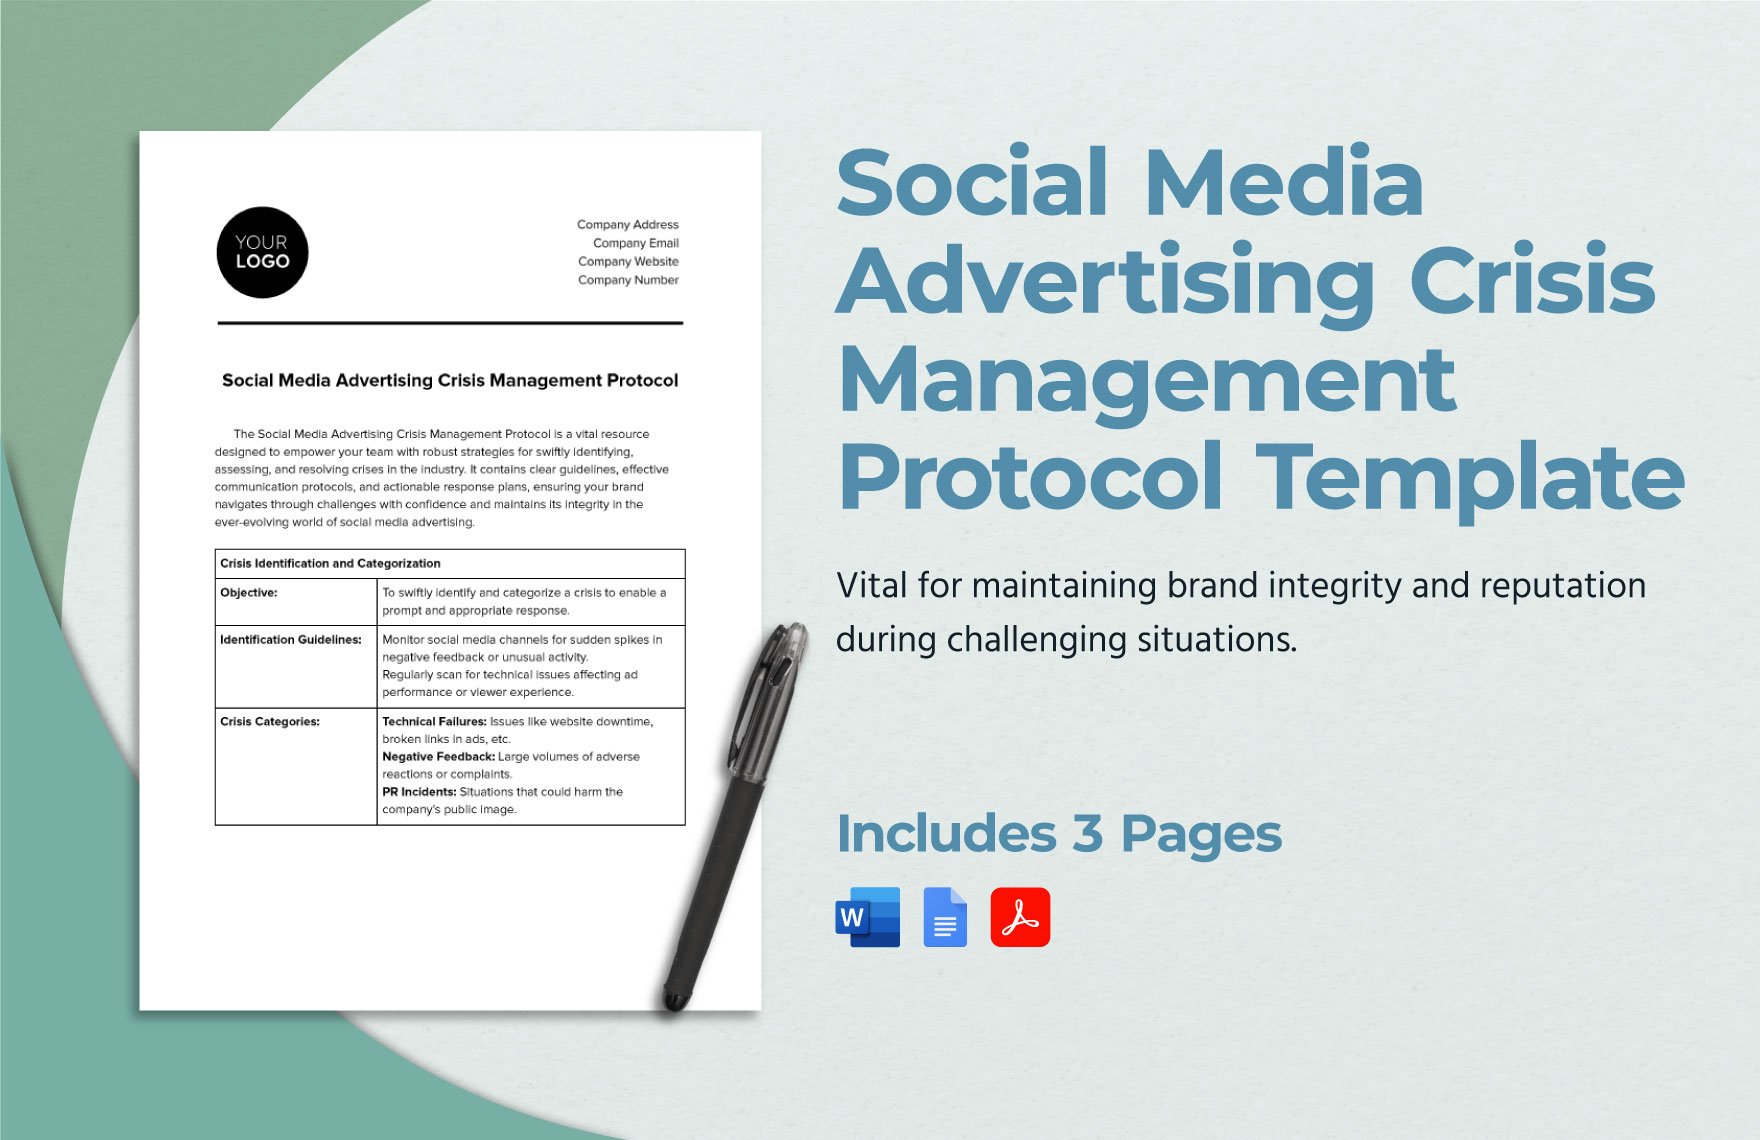 Social Media Advertising Crisis Management Protocol Template